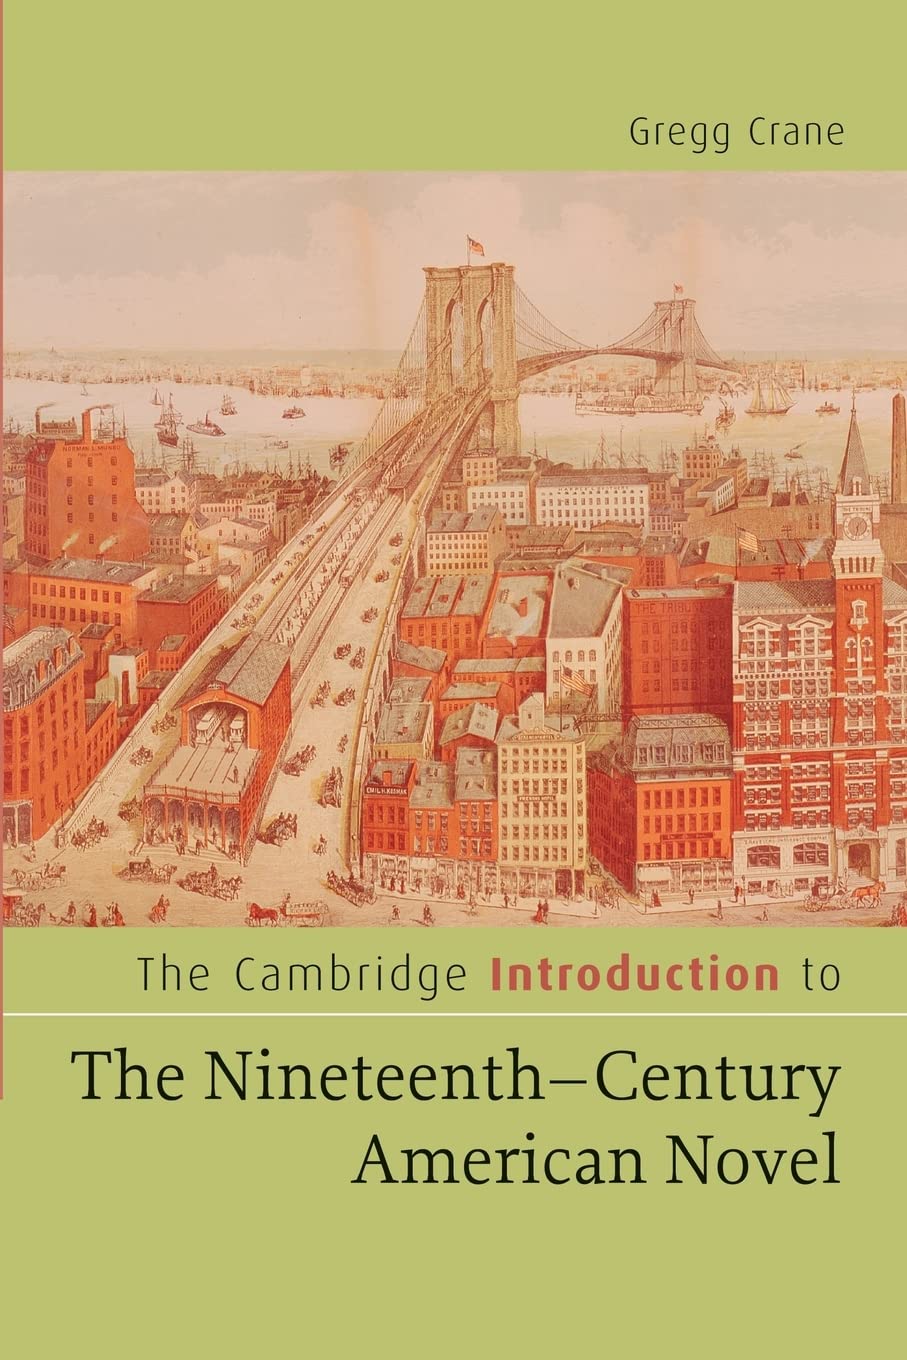 Nineteenth Century American short stories. A Letter of Introduction 19 Century. Книги английских издательств